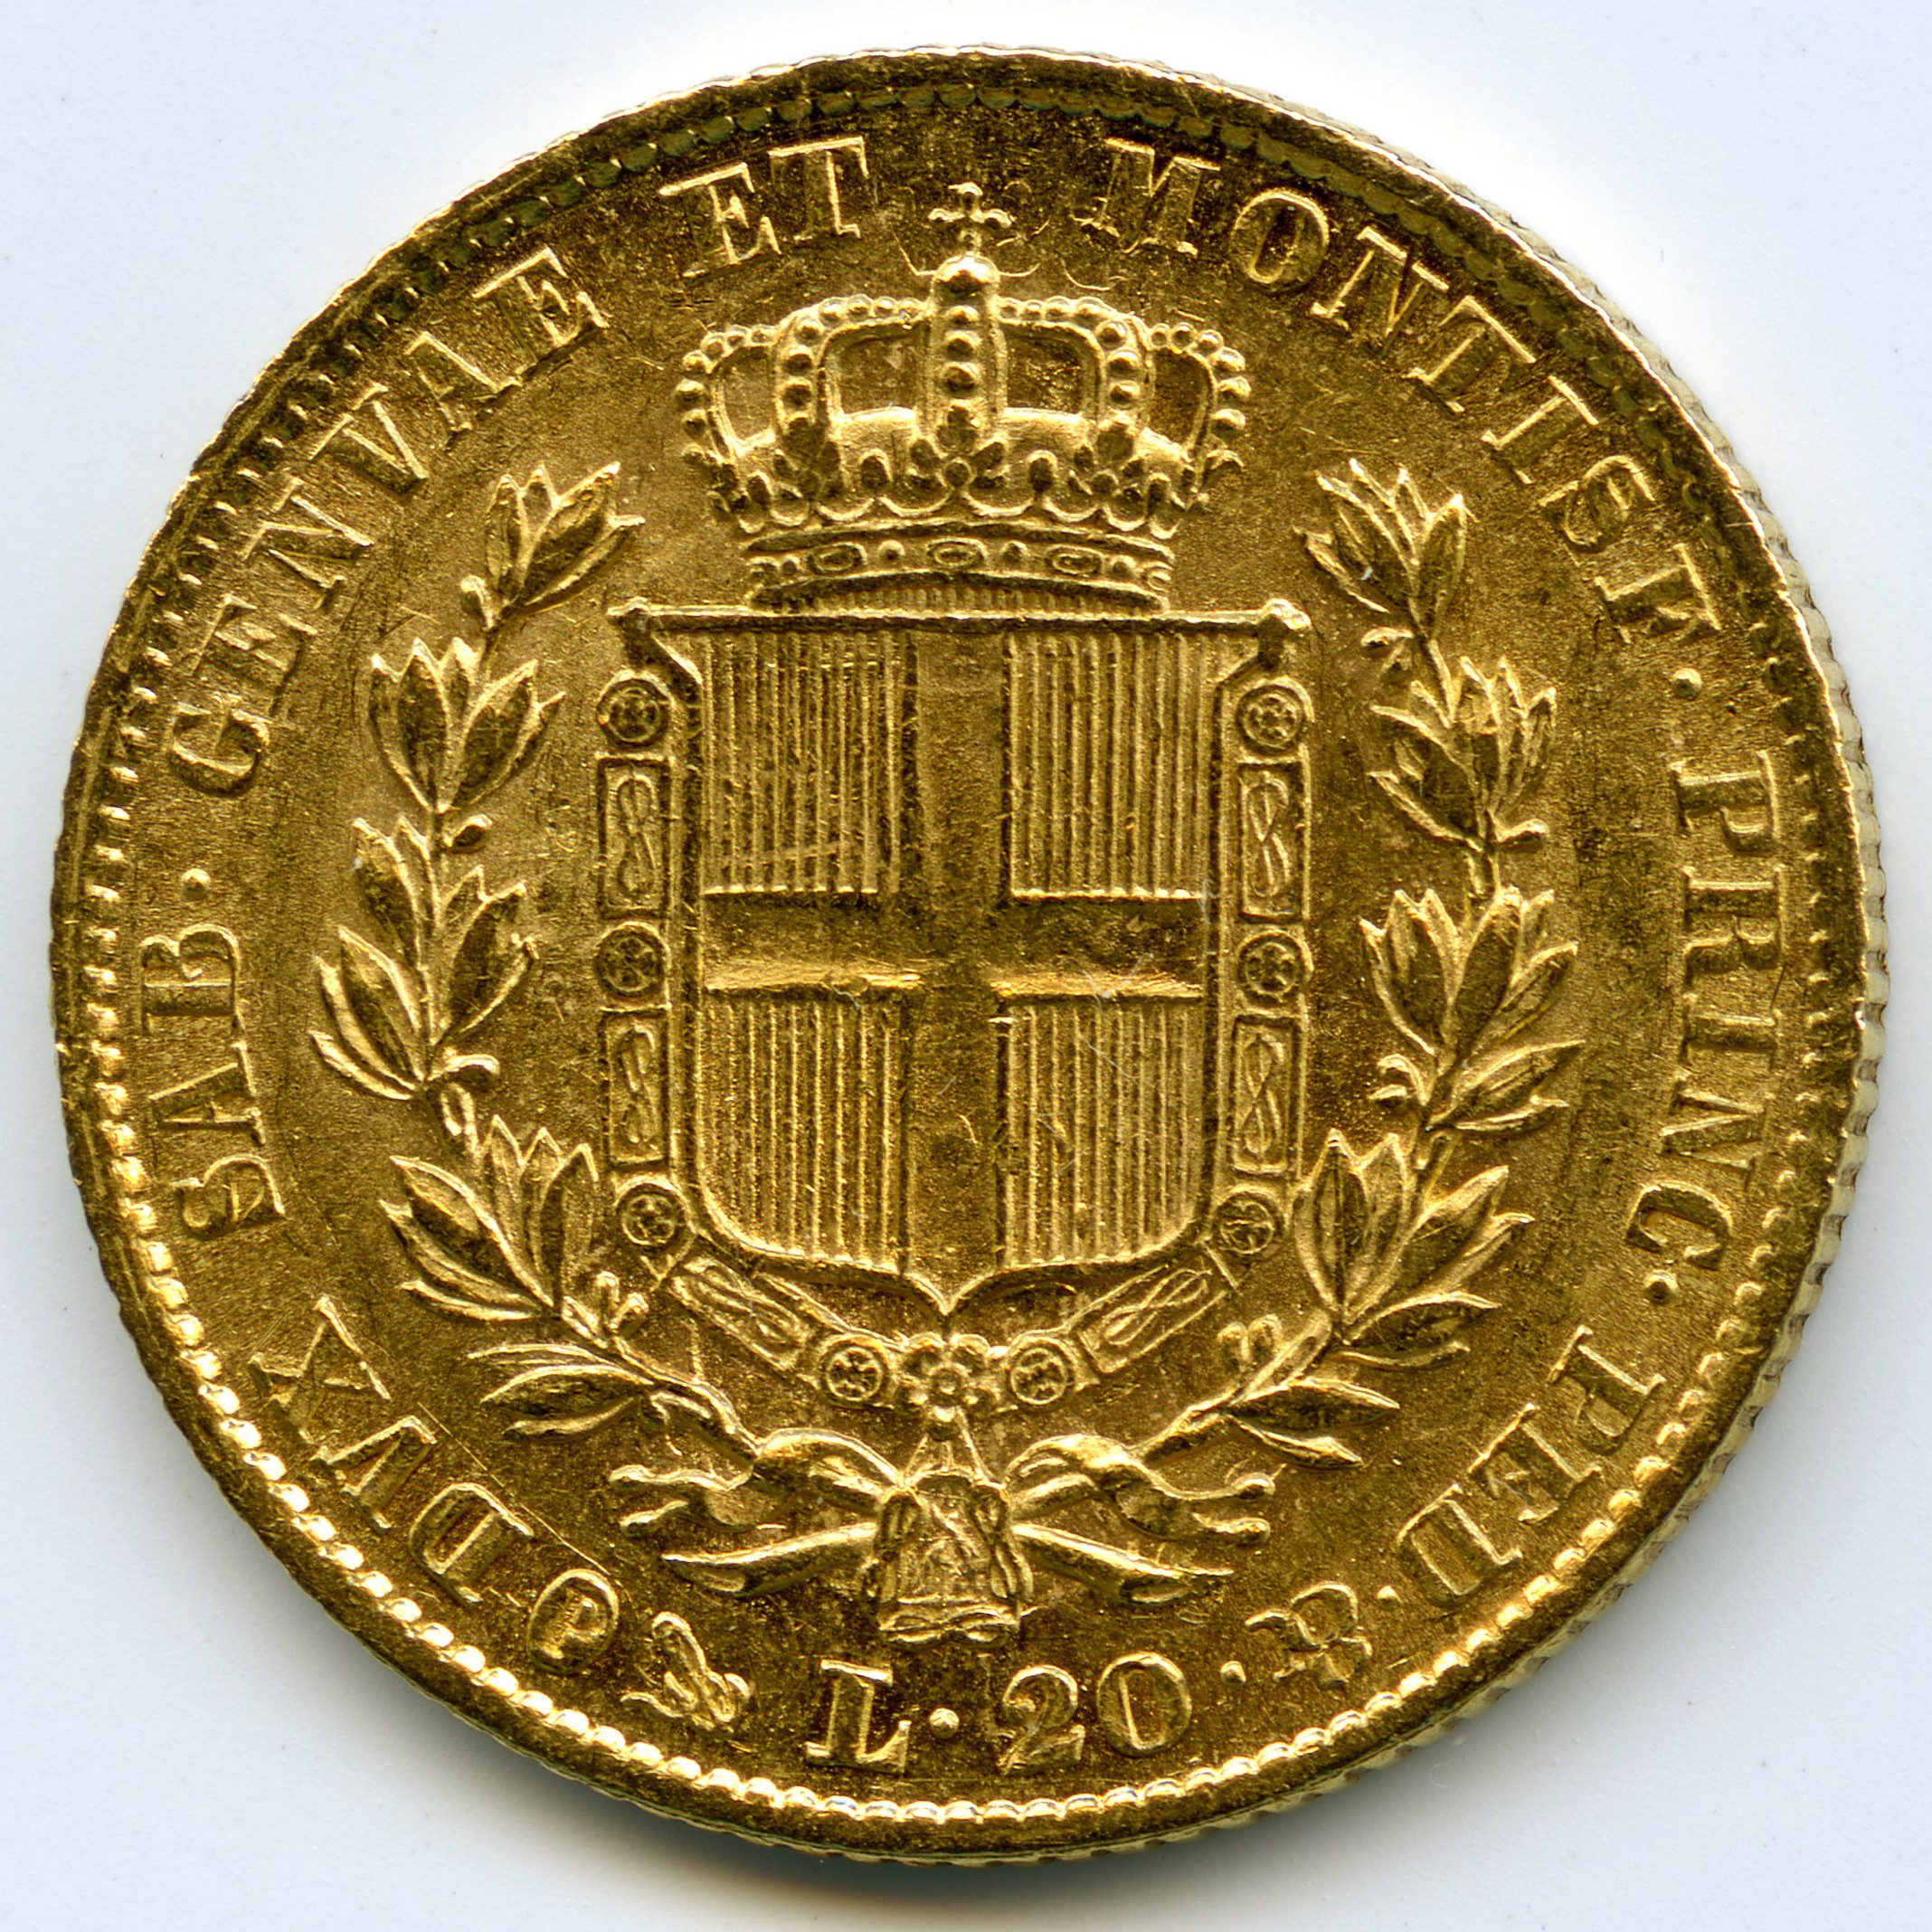 Italie - 20 Lire - 1832 - Gênes revers